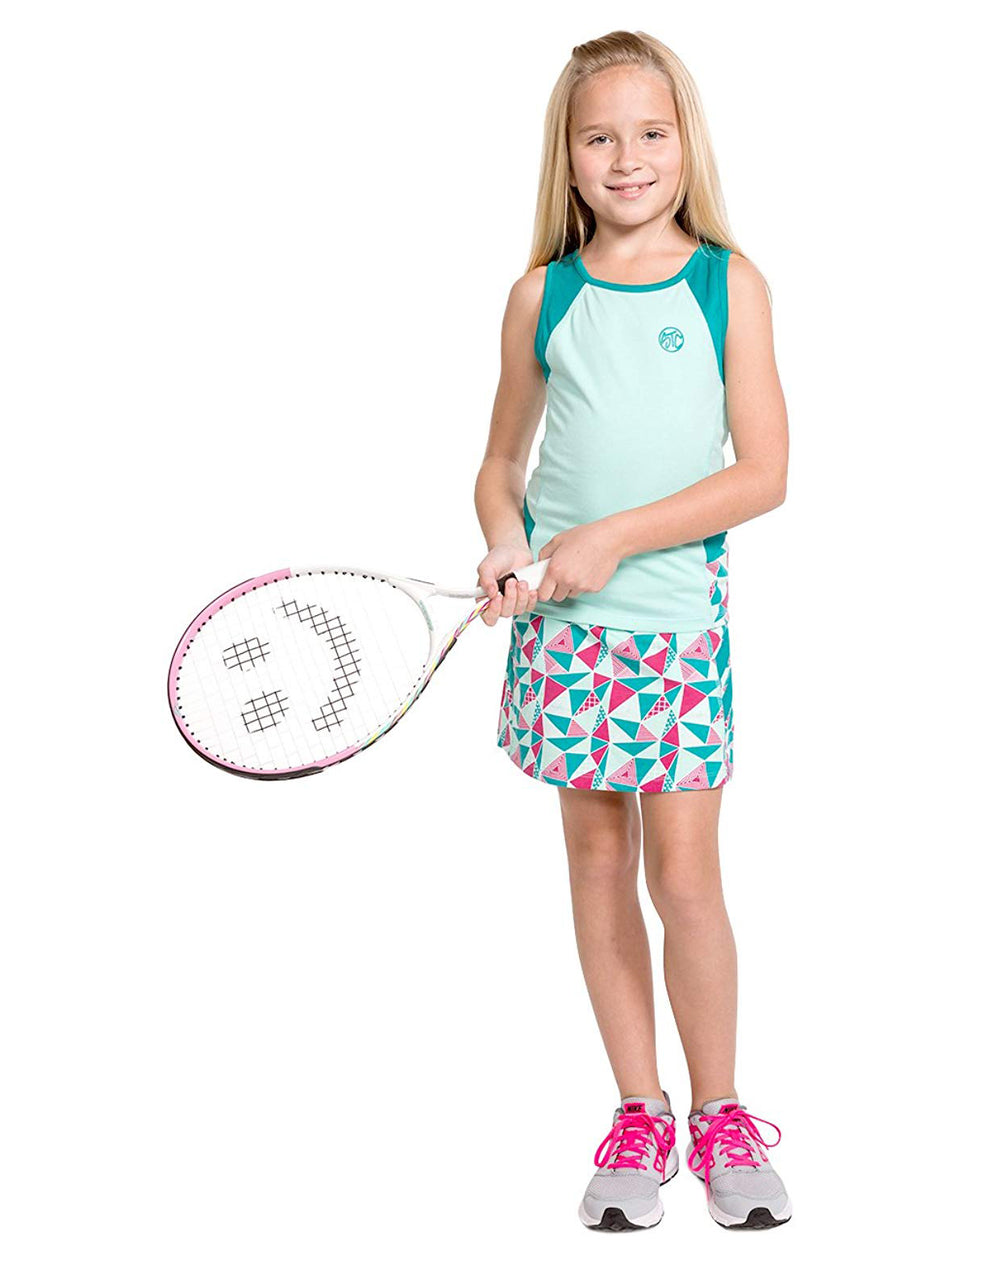 Best Stylish Tennis Clothing and Skirt Set for Girls - Street Tennis Club